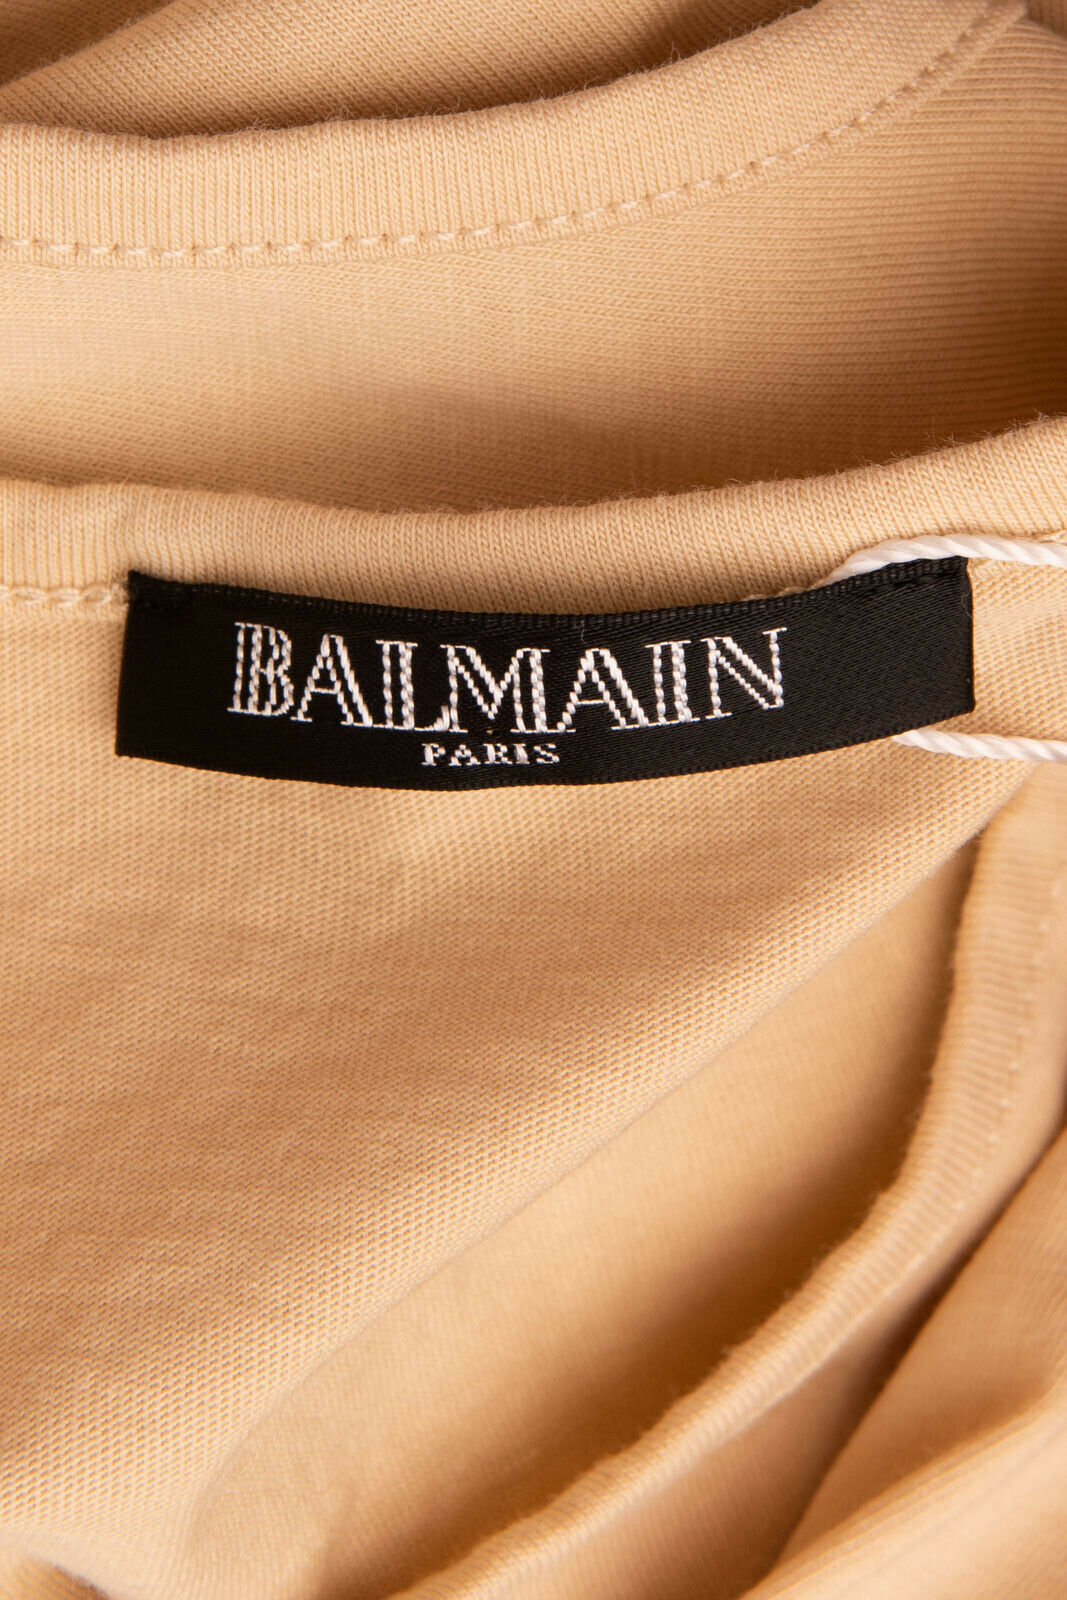 BALMAIN T-Shirt Top Size 38 Button Shoulder